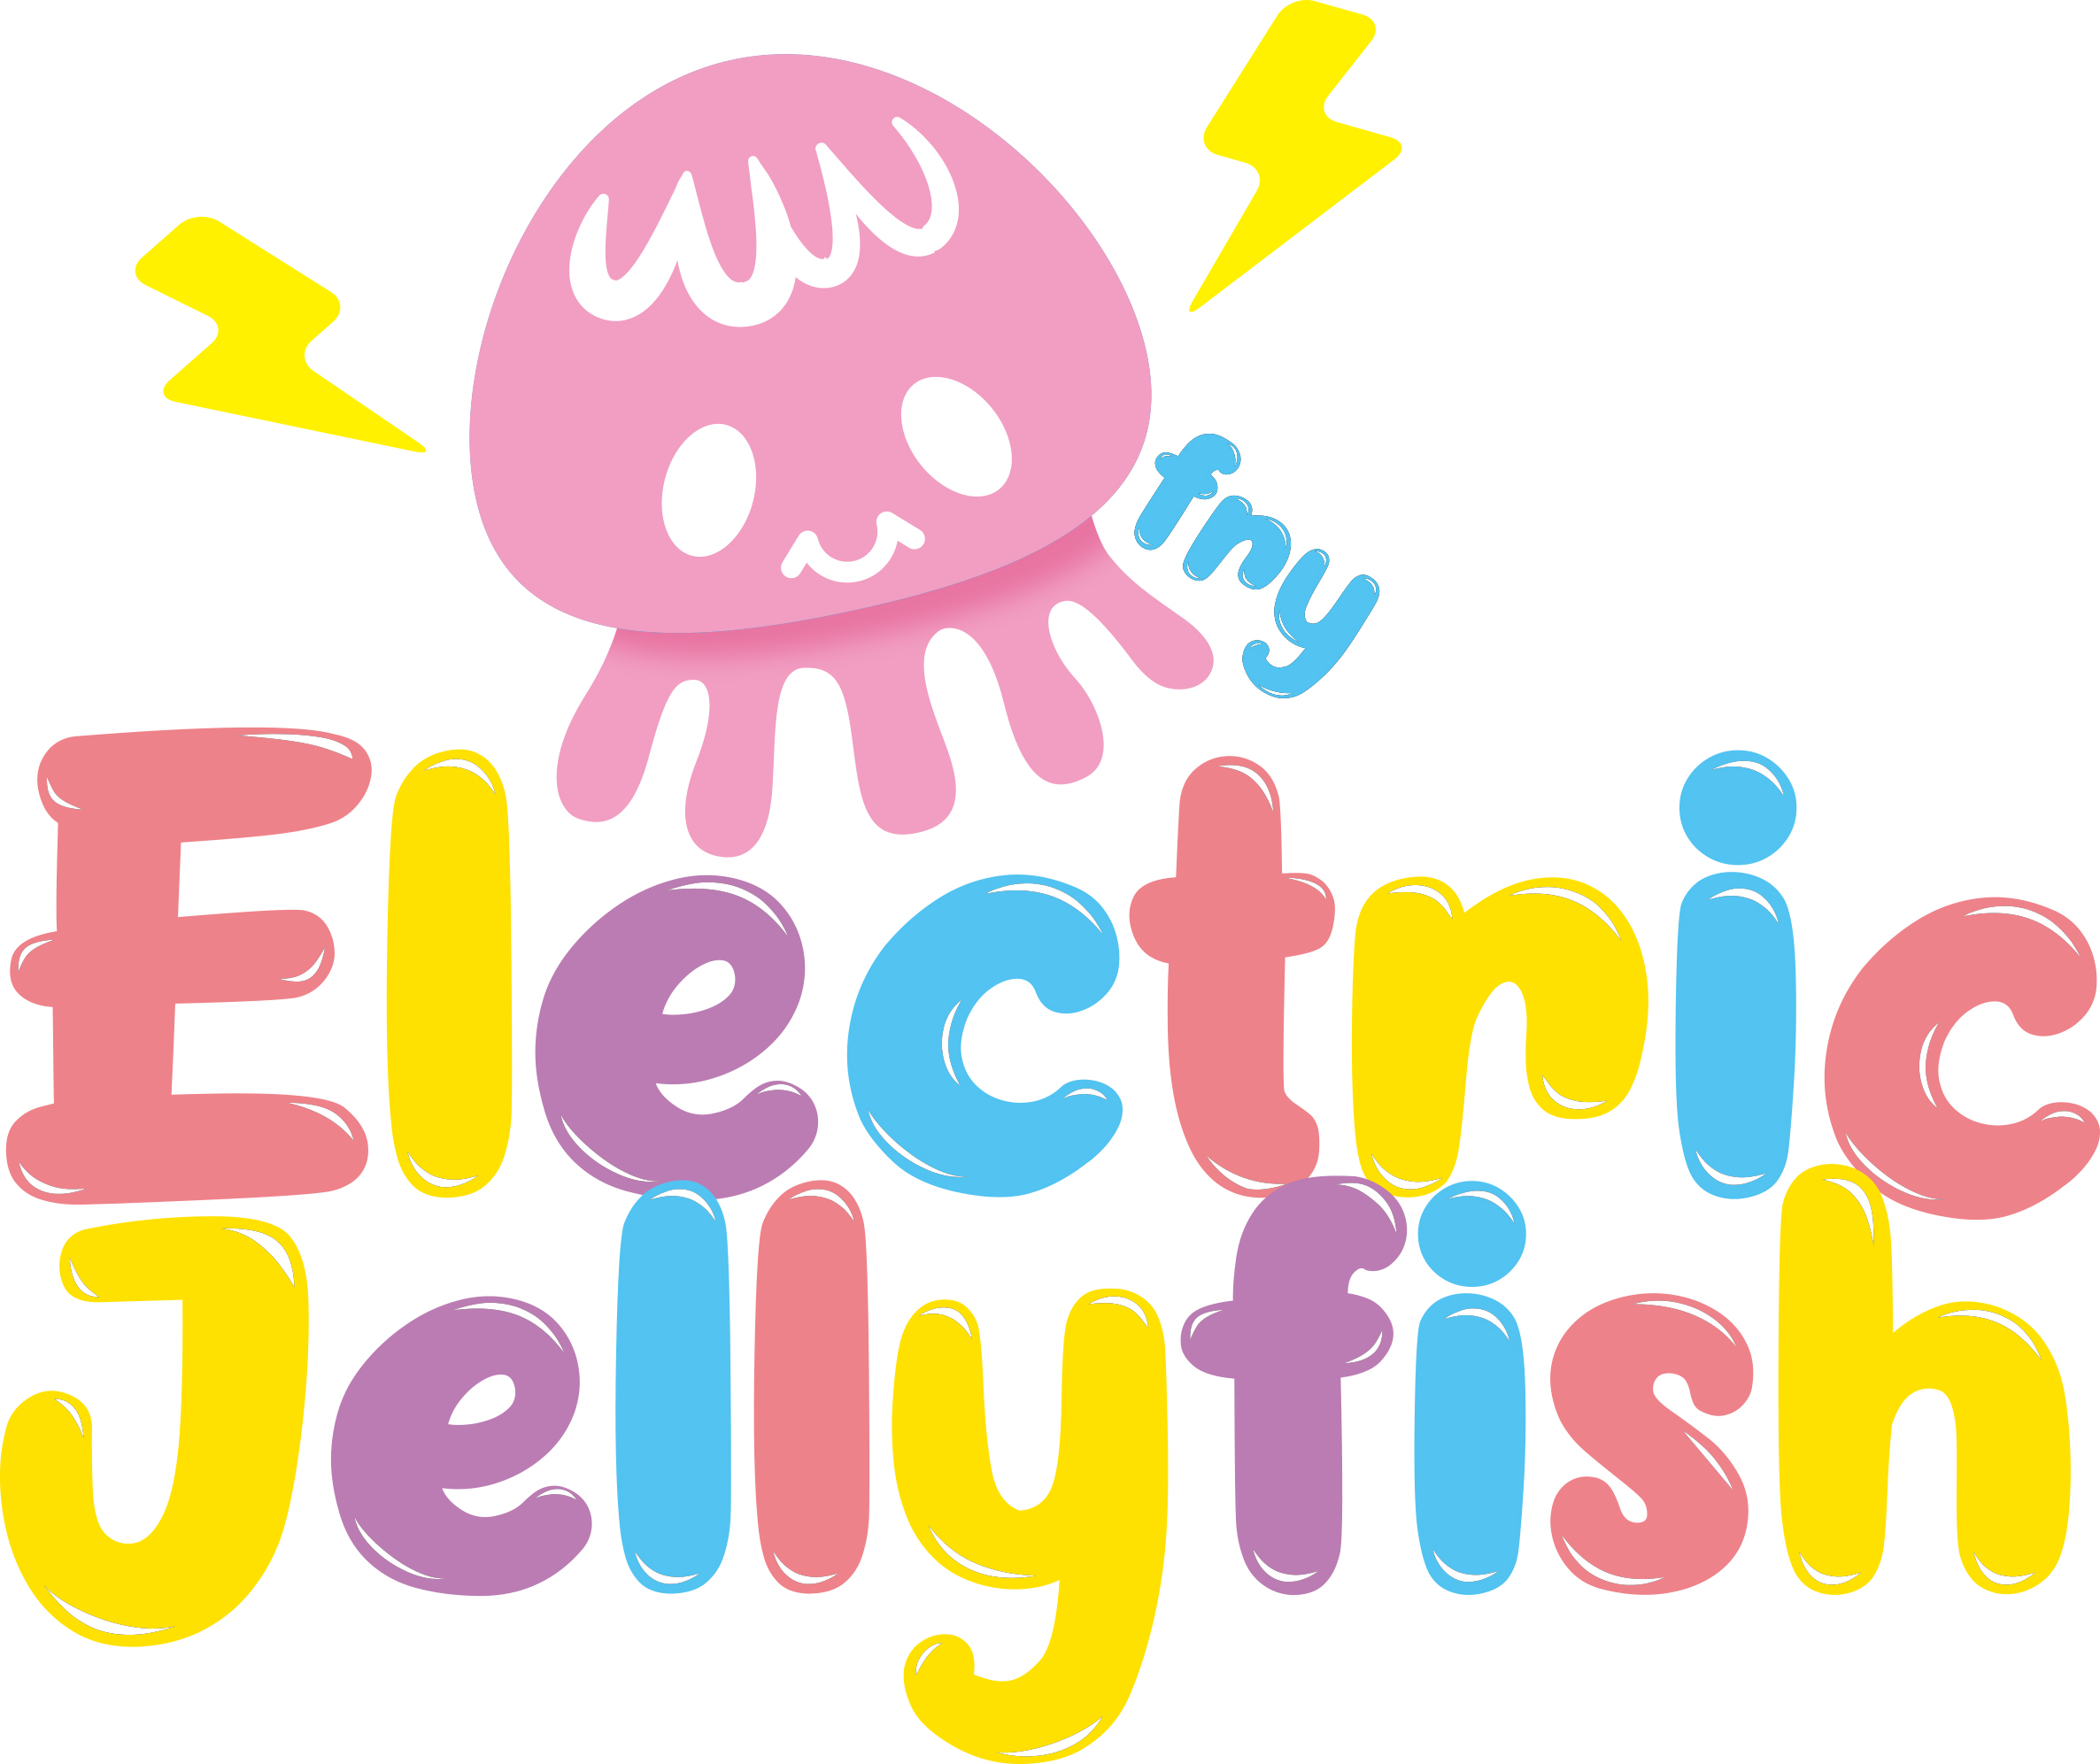 ELECTRIC JELLYFISH～Fry～